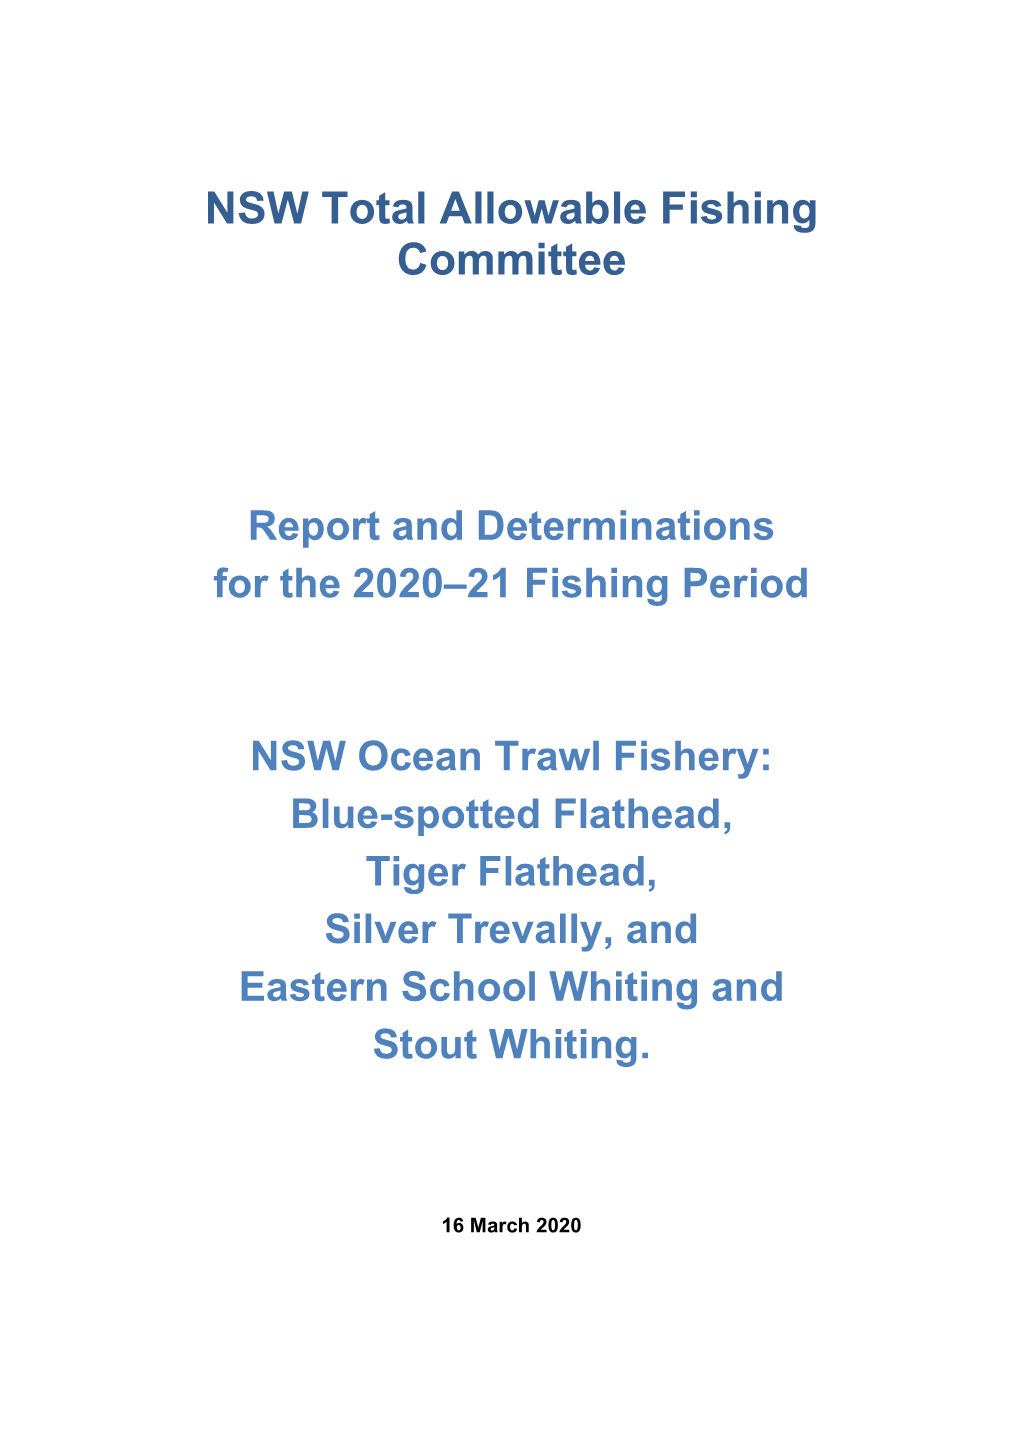 NSW Ocean Trawl Fishery TACC Determinations 2020-21